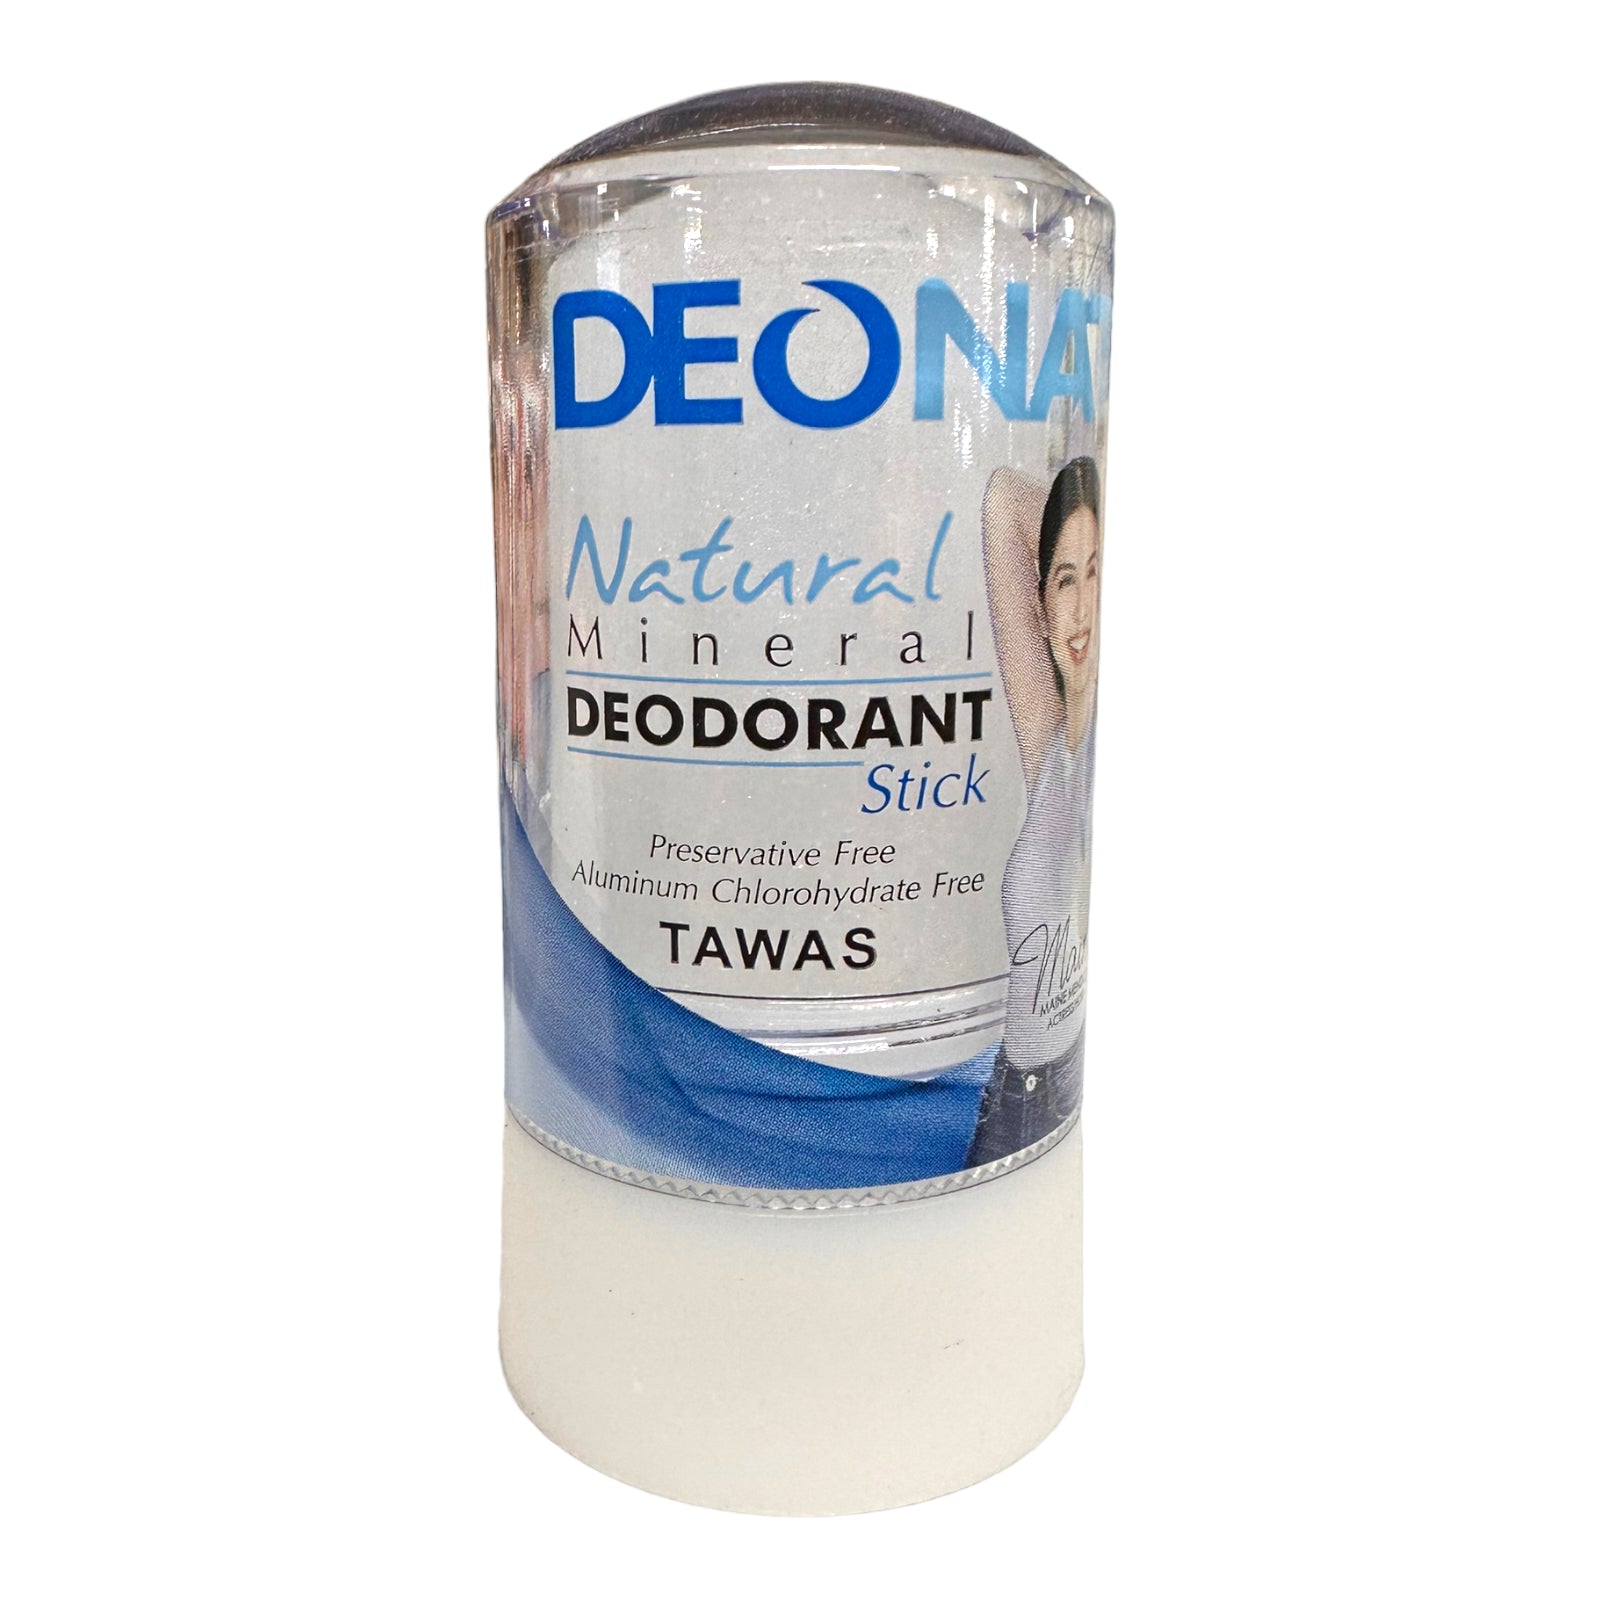 DEONAT Mineral Deodorant Stick Tawas 60g - NATURAL - ( Blue )